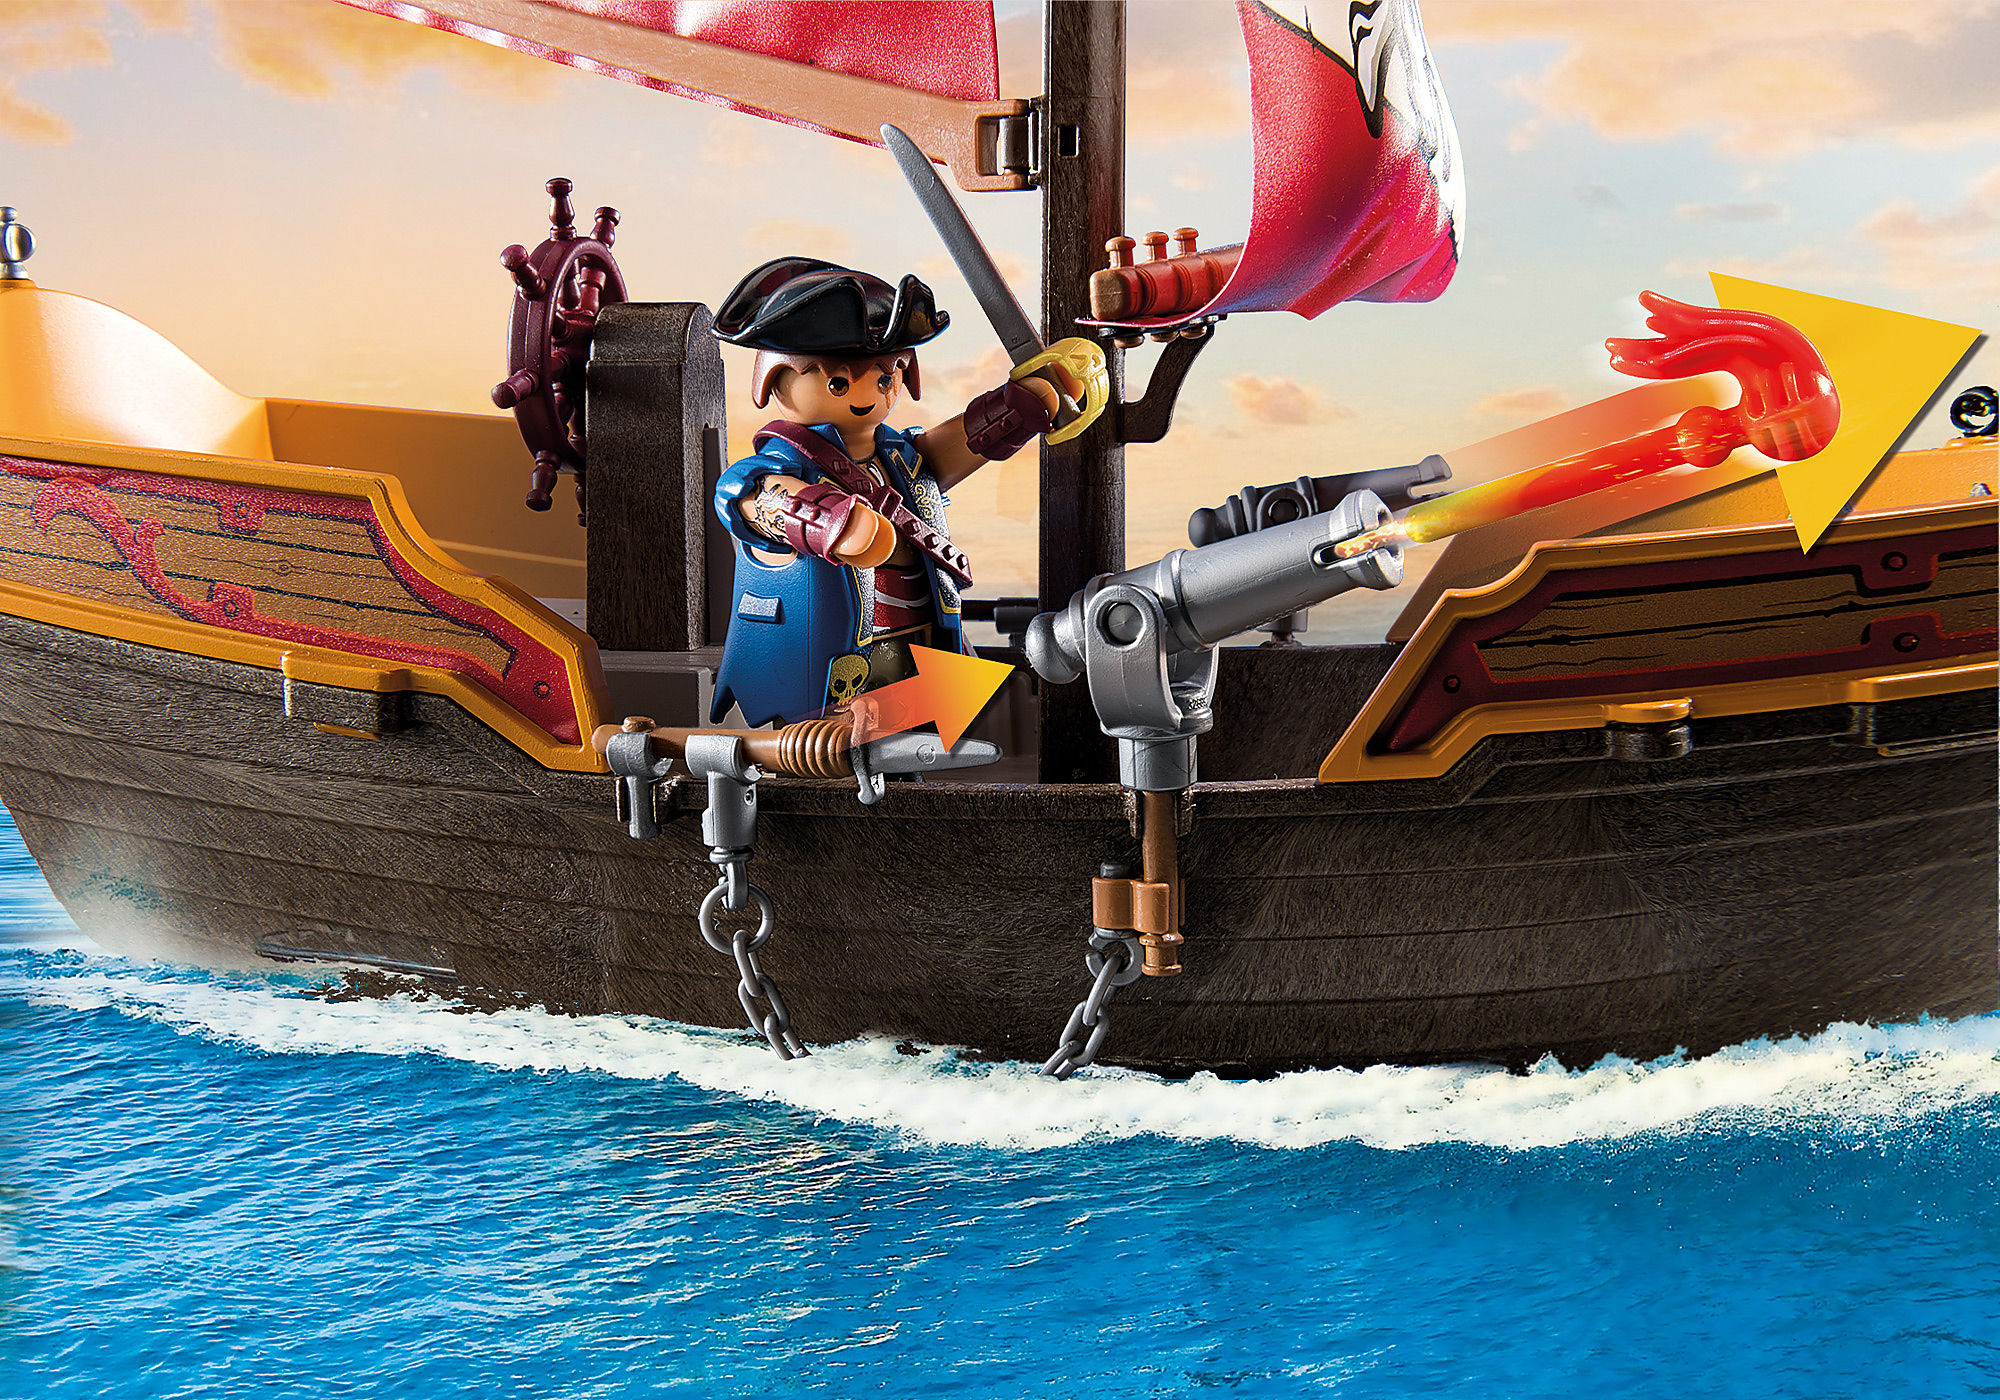 Playmobil Pirates 71418 pas cher, Chaloupe des pirates